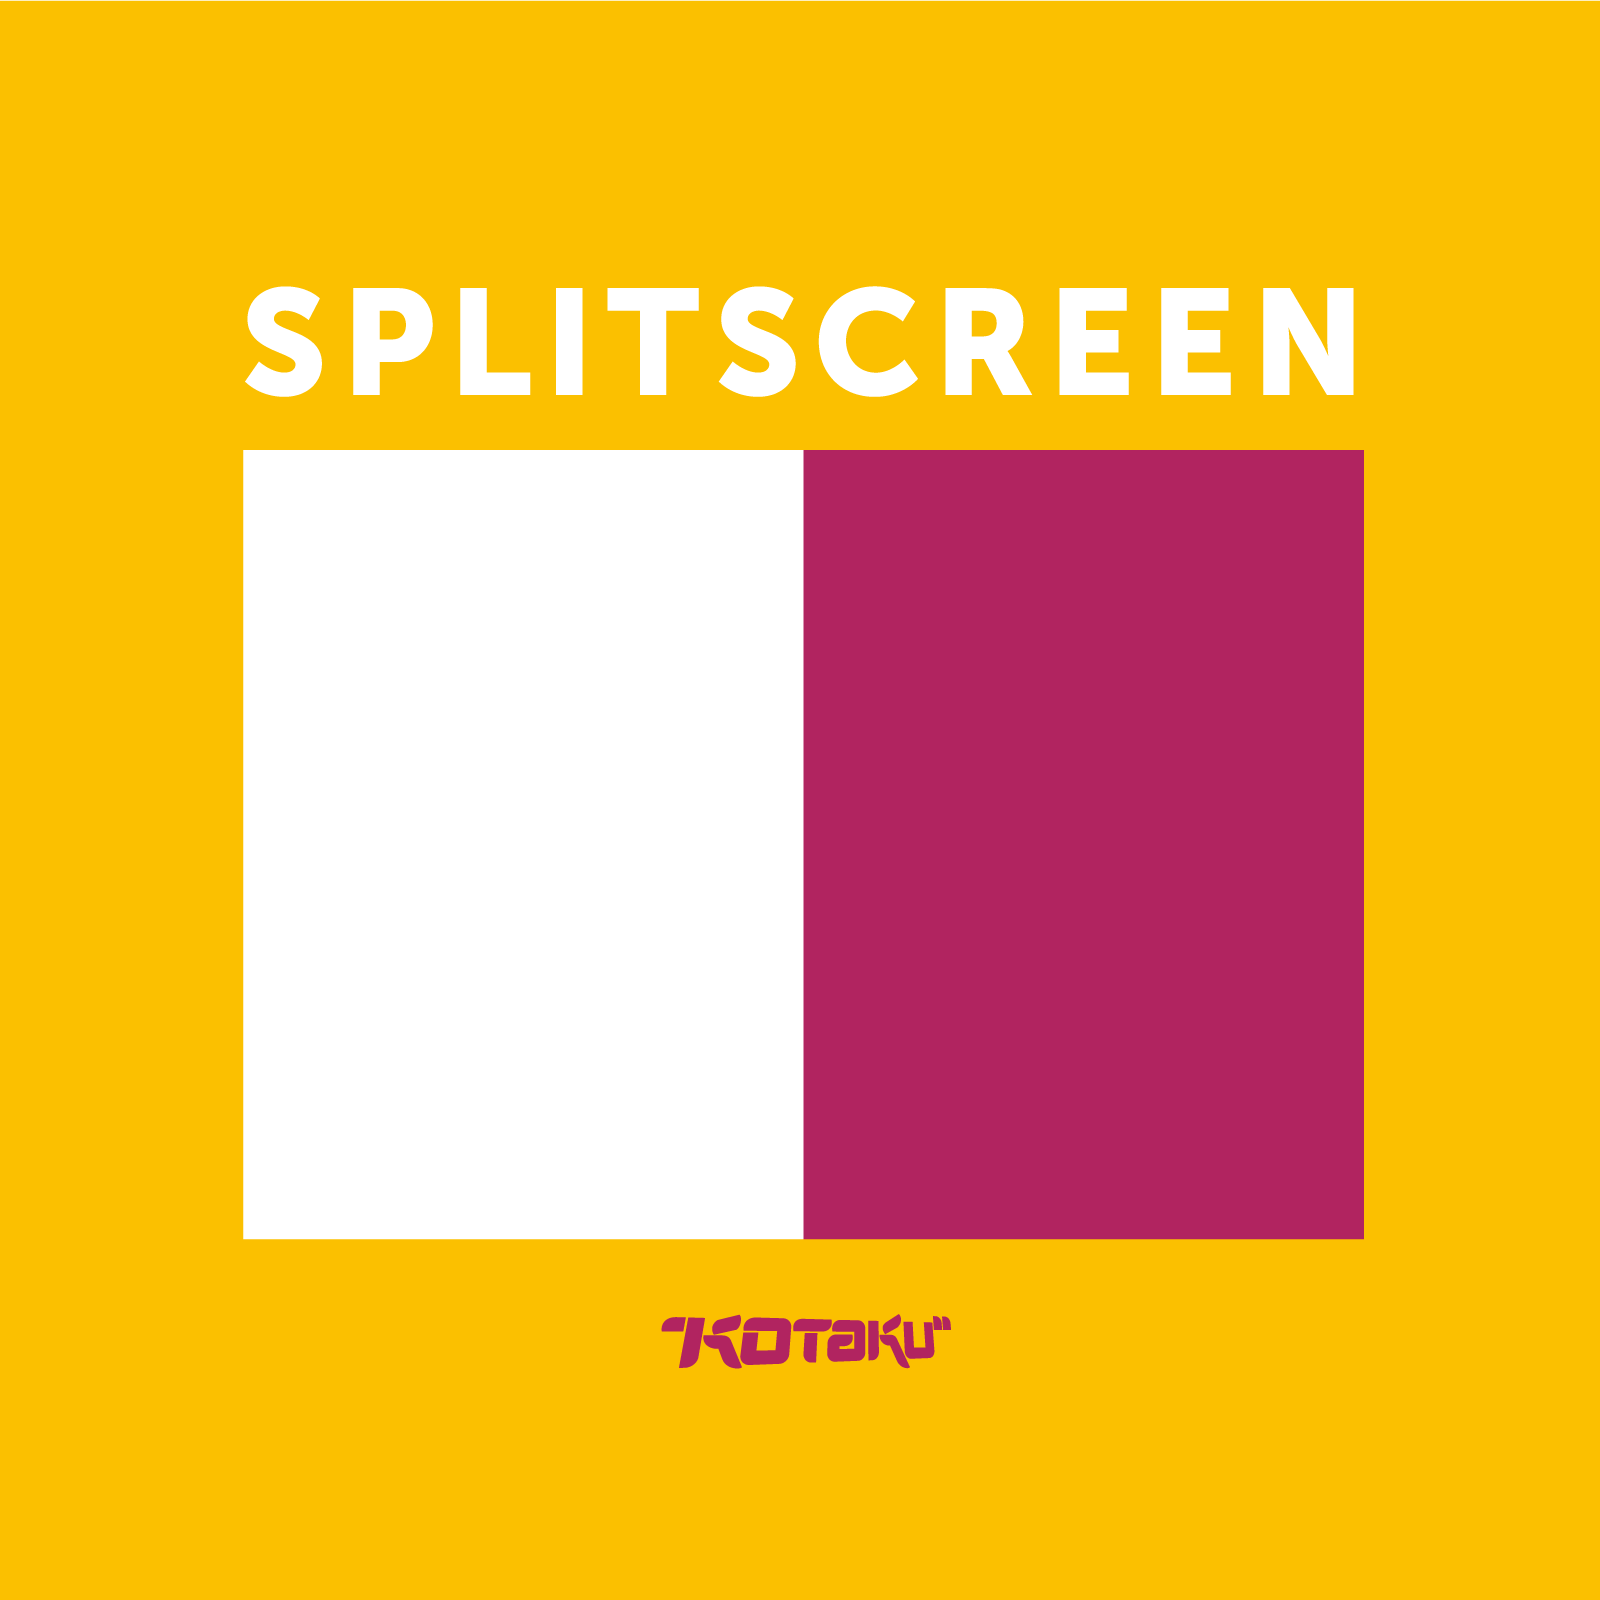 splitscreen_2020_sketches_8.png